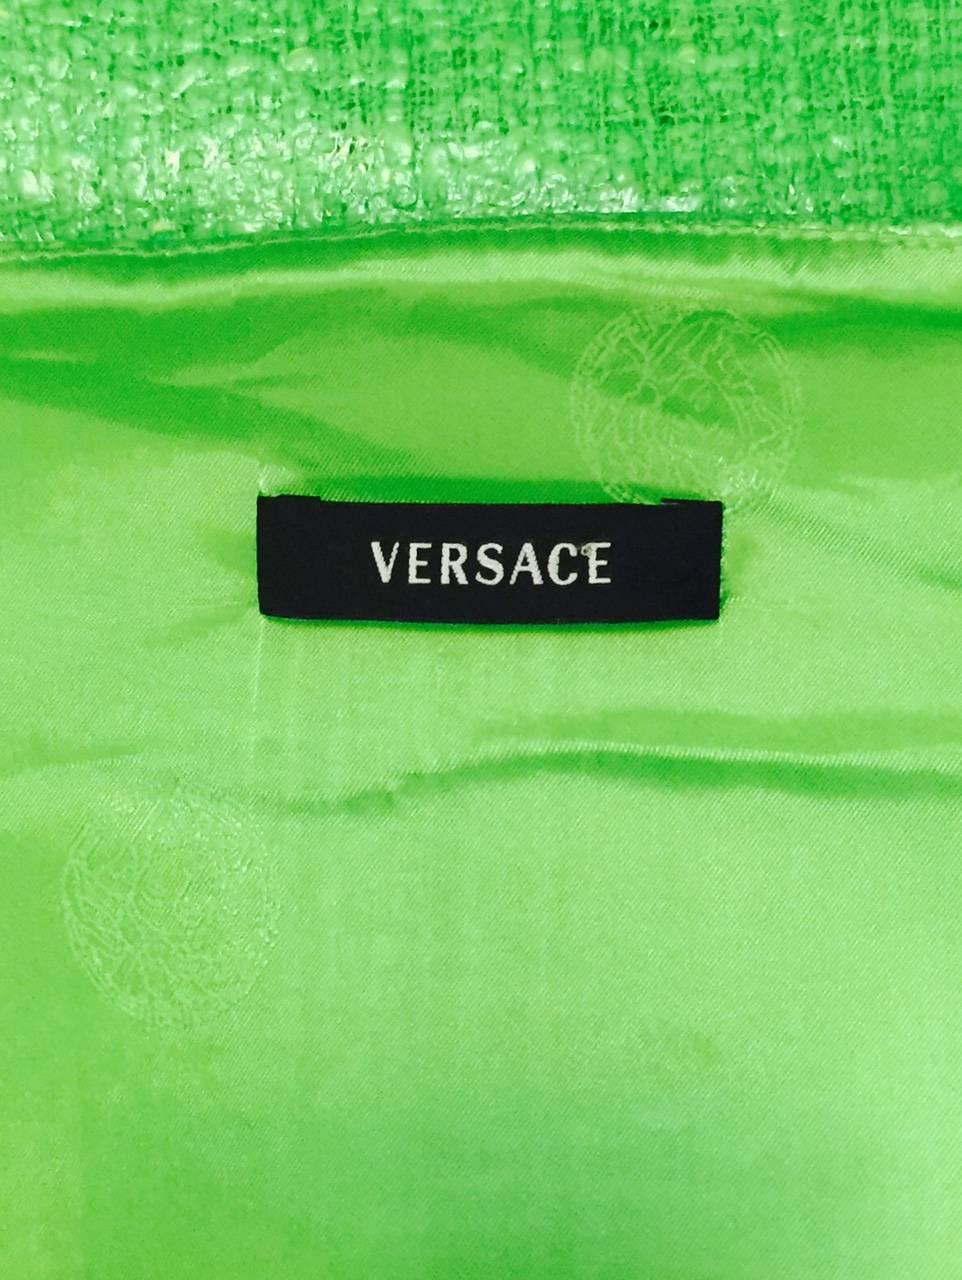 New Versace Neon Green Cotton Blend  Sheath w. Edgy Polyurethane Finish 2